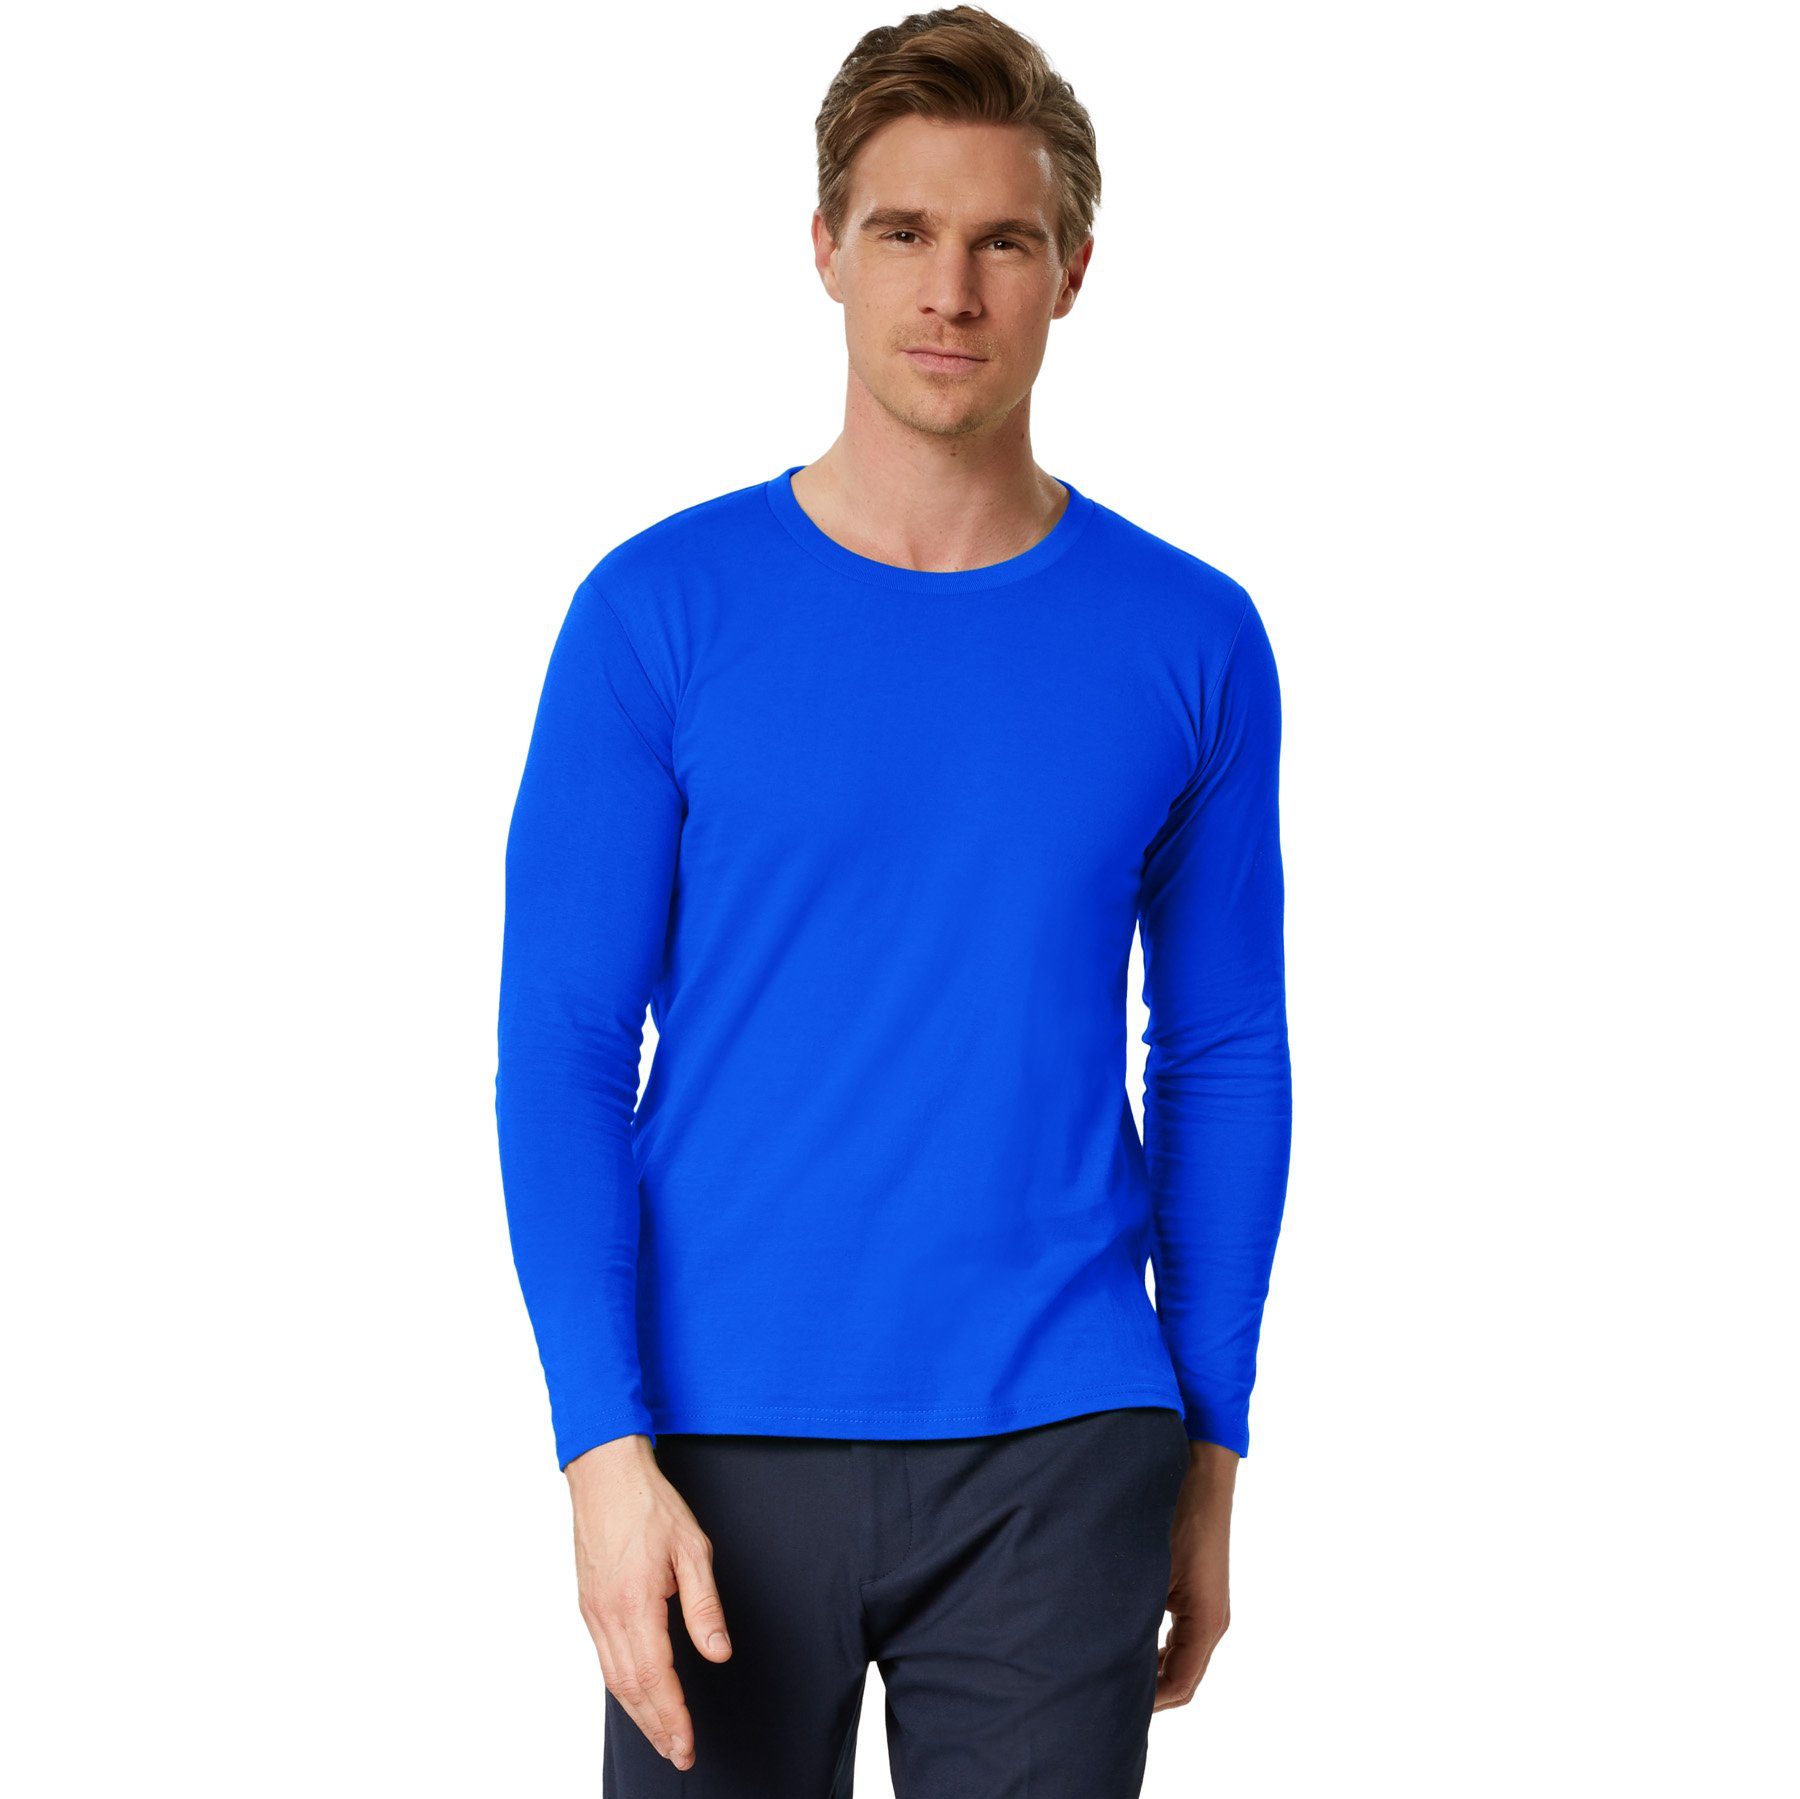 dressforfun Longsleeve Langarm-Shirt Männer Rundhals blau